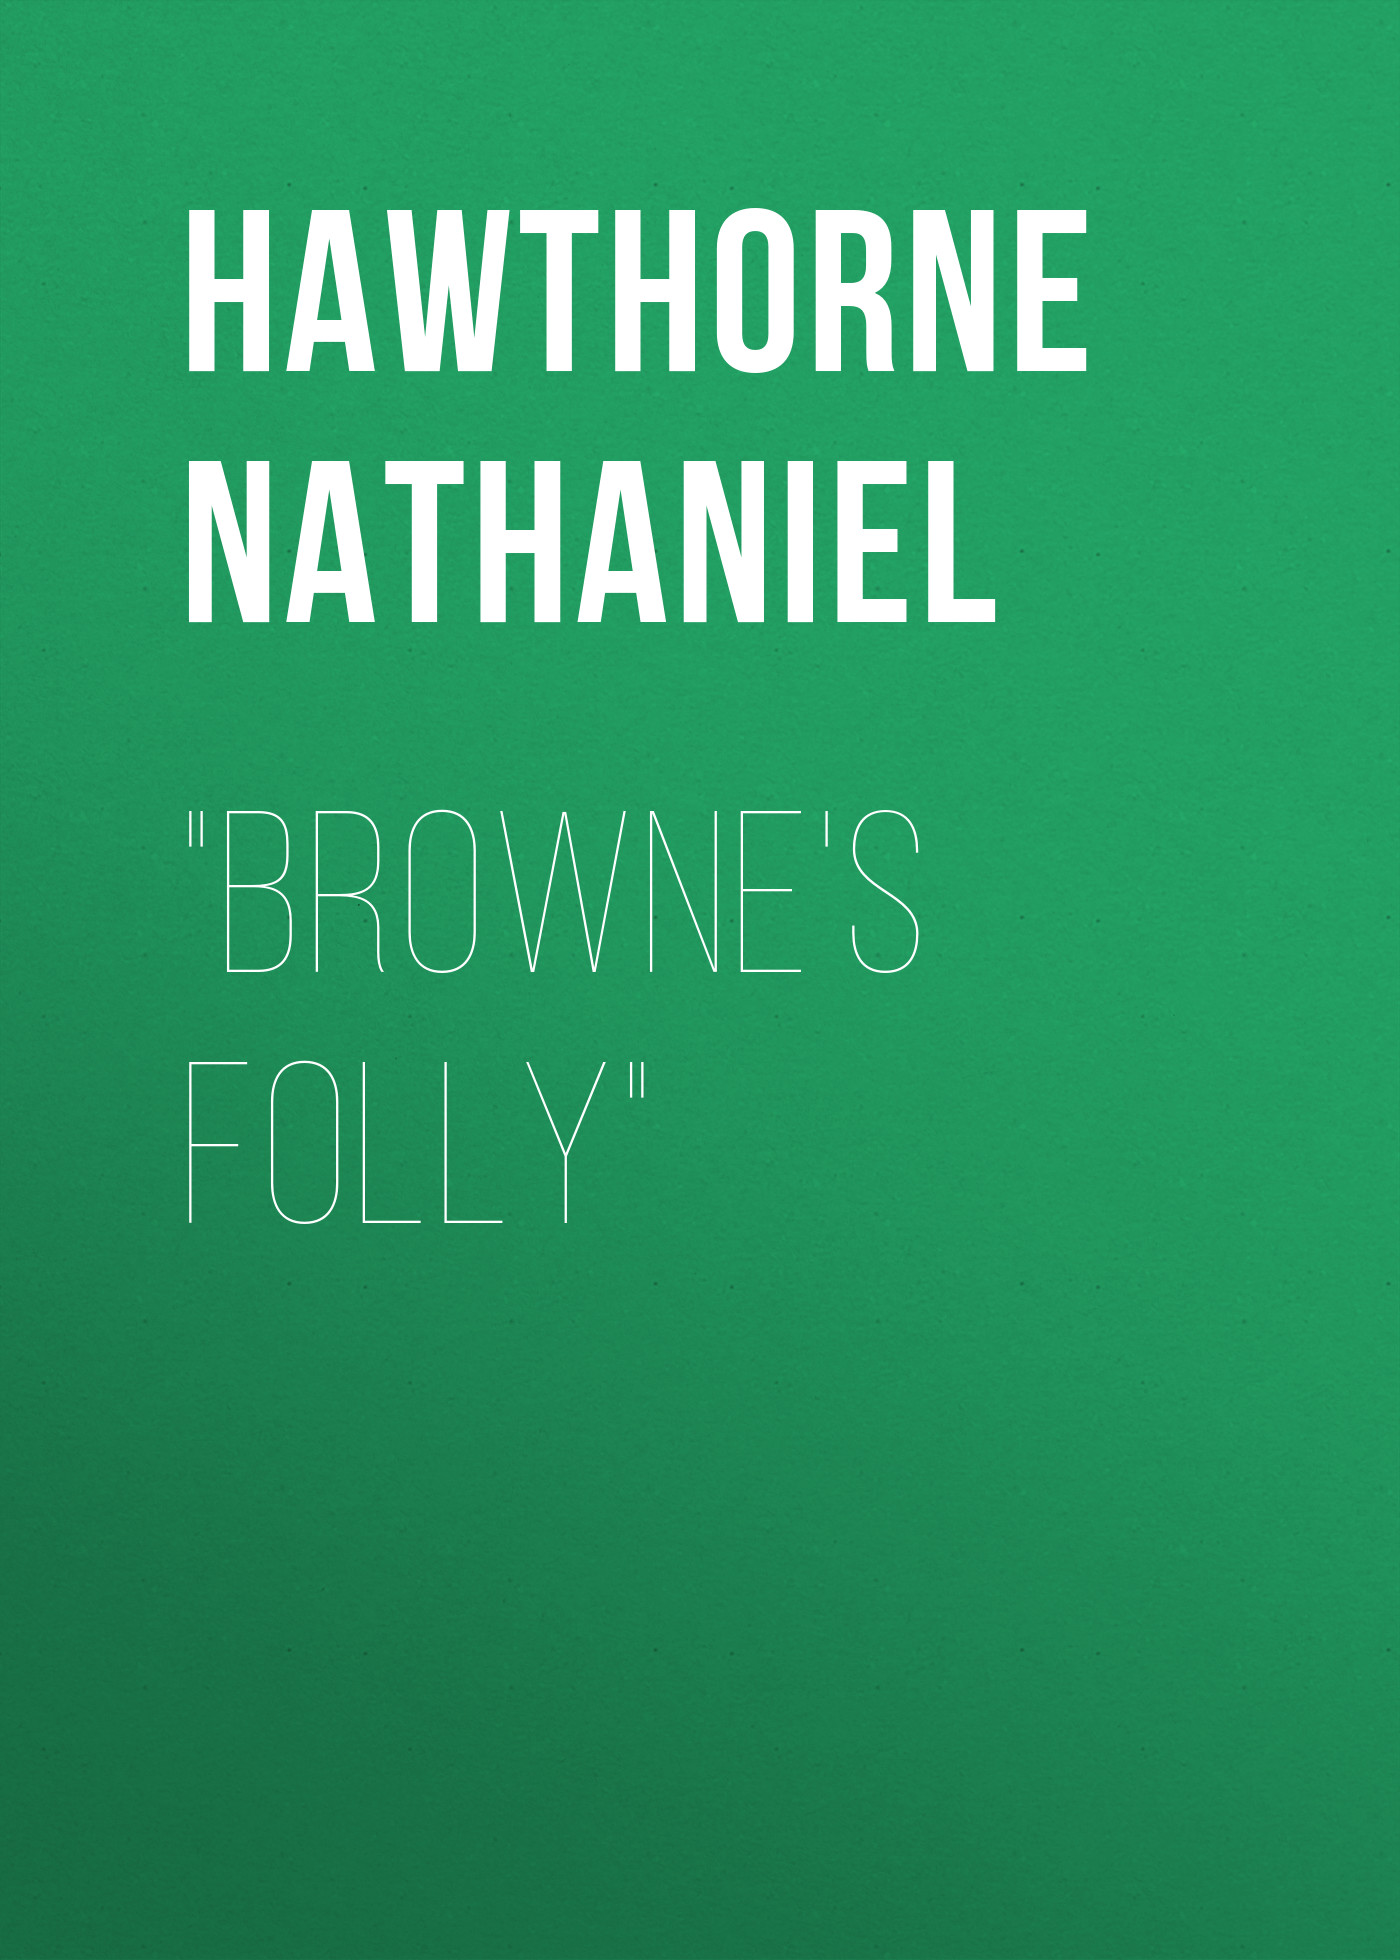 Hawthorne Nathaniel 